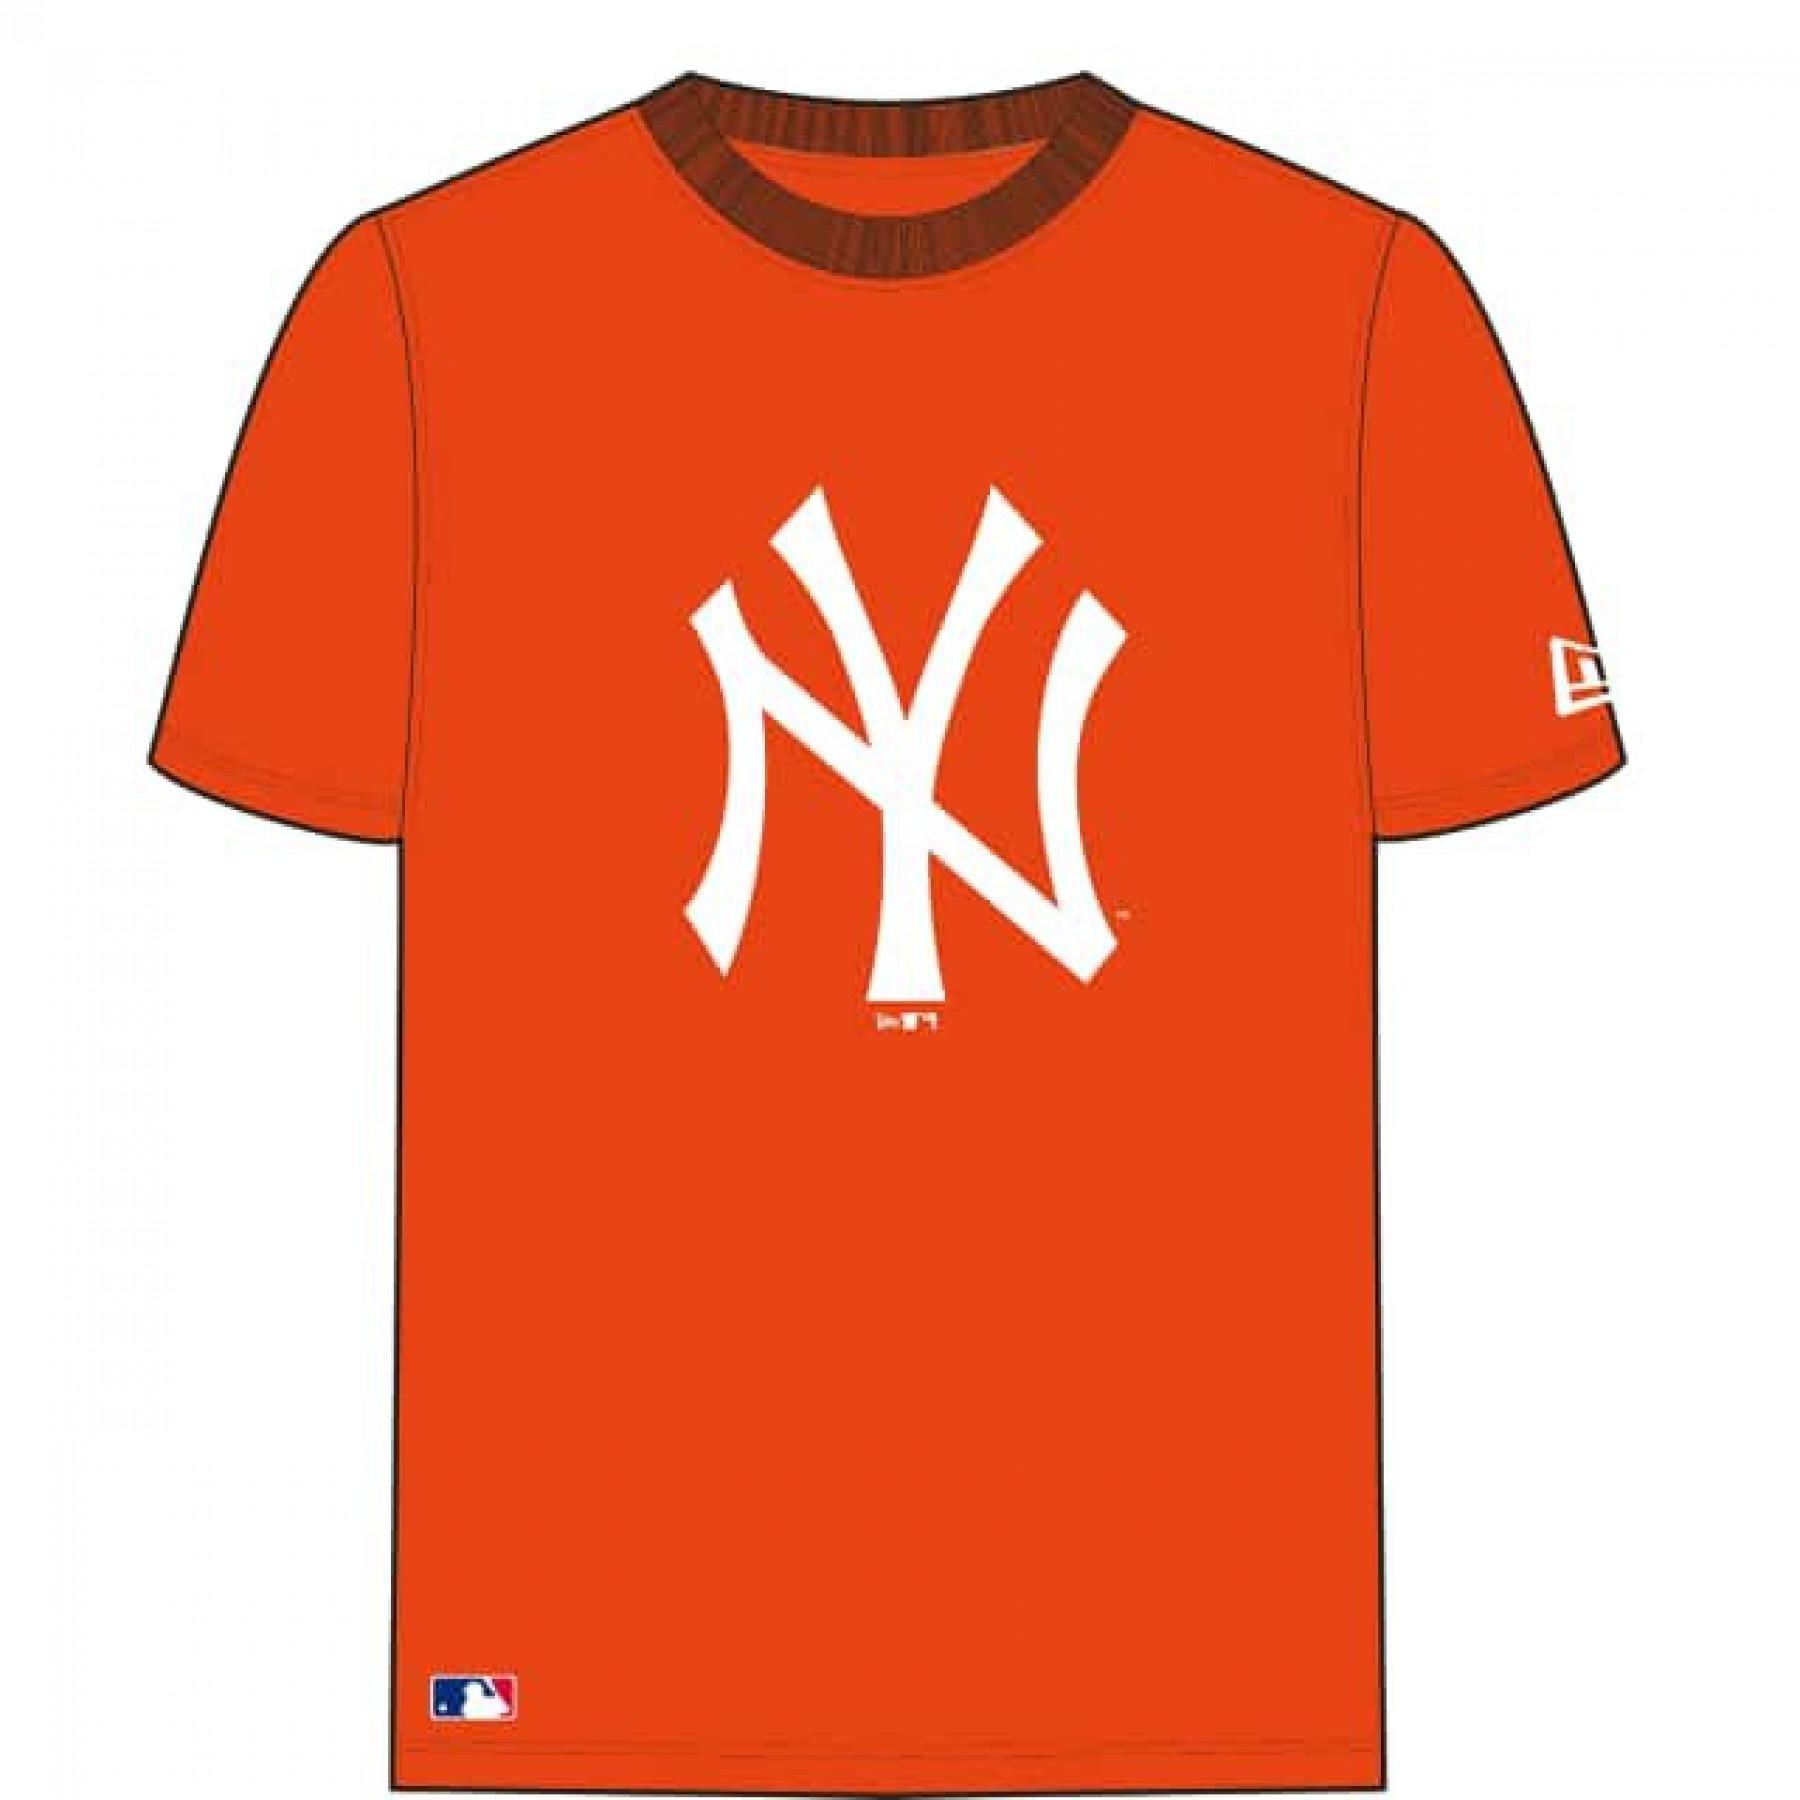  New EraT - s h i r t   Seasonal Tm Logo New York Yankees